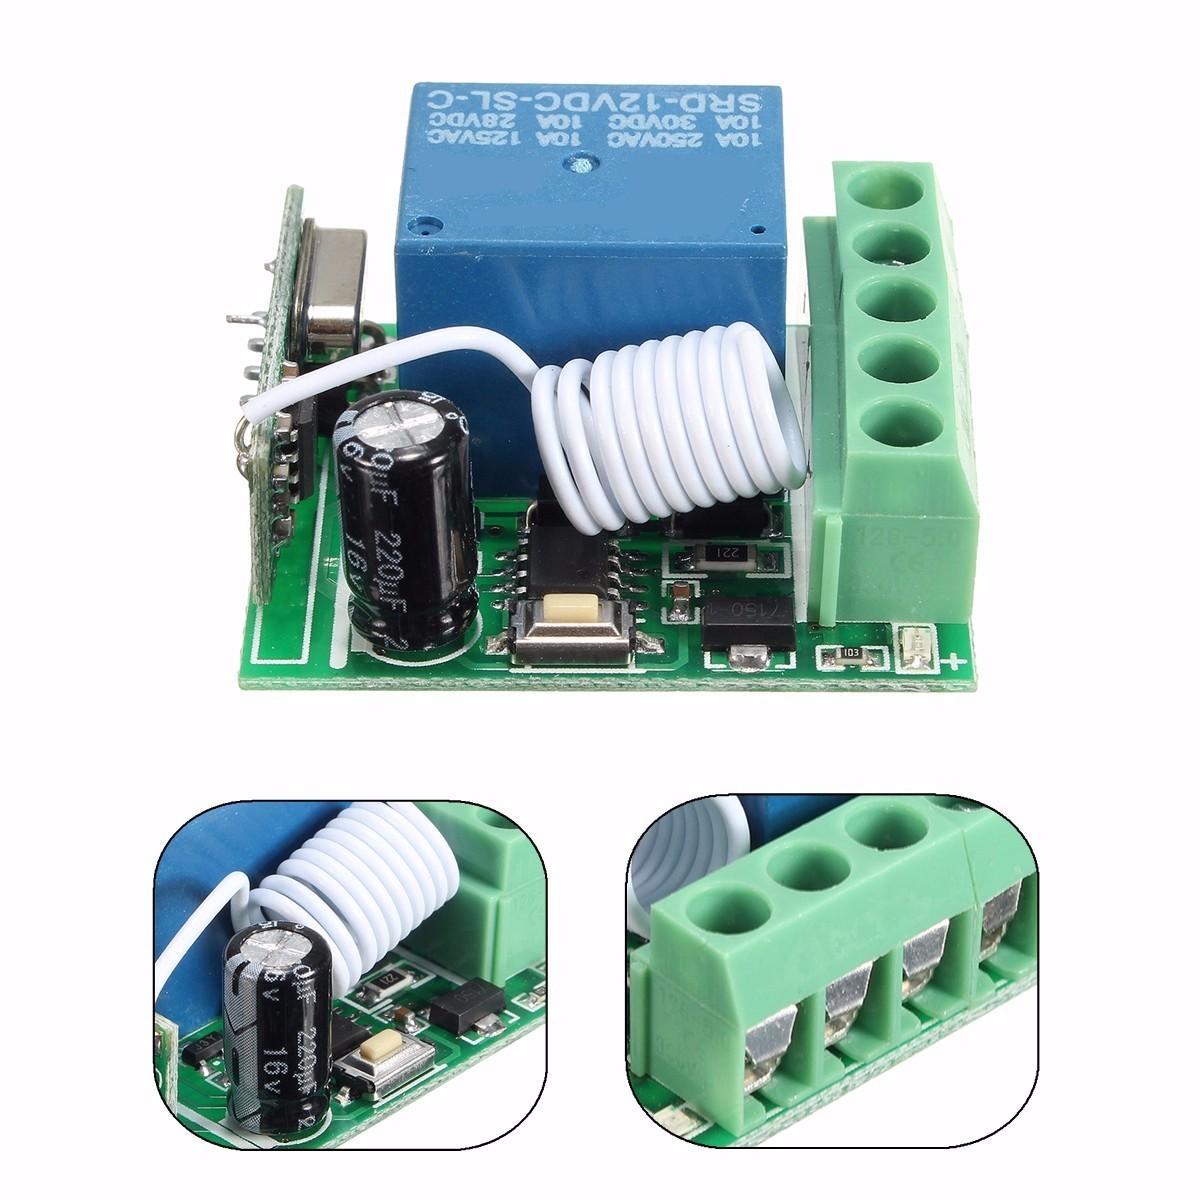 

100pcs DC12V 10A 1CH 433MHz Wireless Relay RF Remote Control Switch Receiver Module